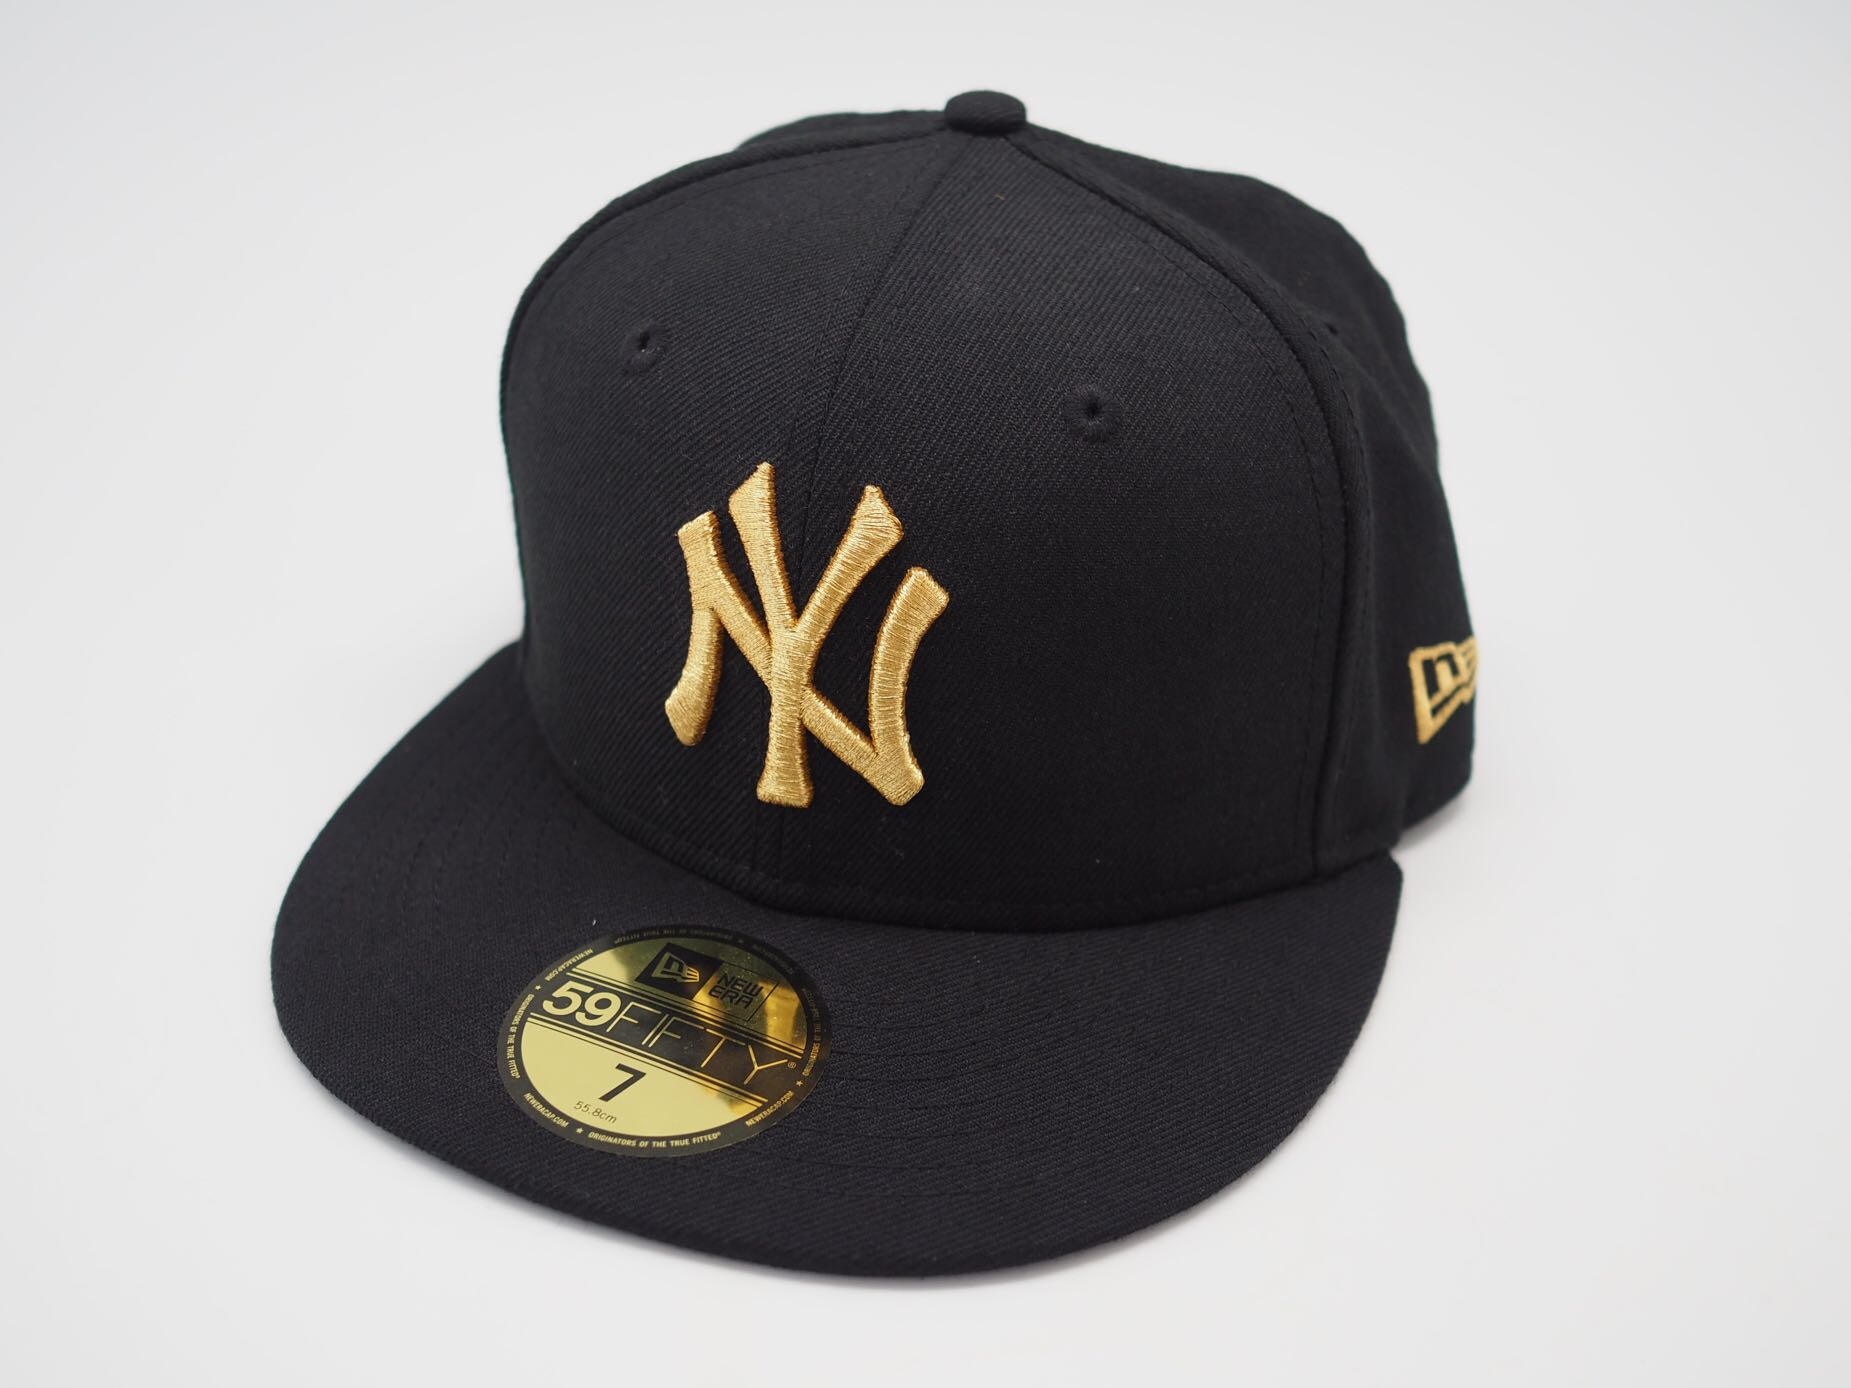 New Era NY Yankees Gold-Black 59Fifty Fitted Baseball Cap by NEW ERA x MLB, Men's Fashion